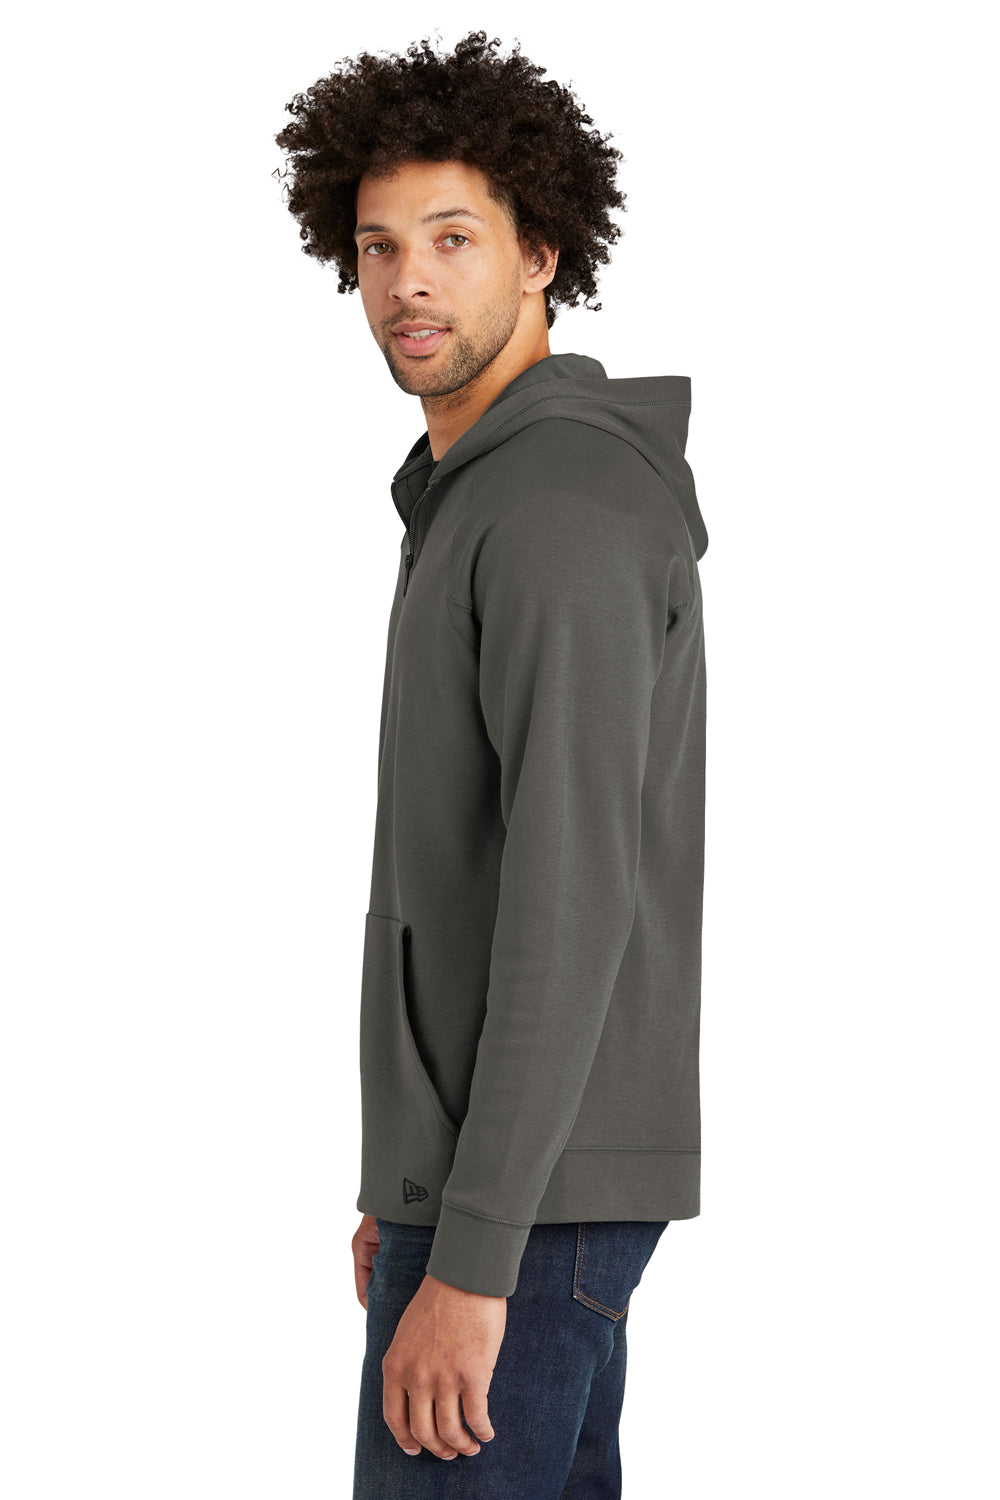 New Era NEA541 Mens STS 1/4 Zip Hooded Sweatshirt Hoodie Graphite Grey Side